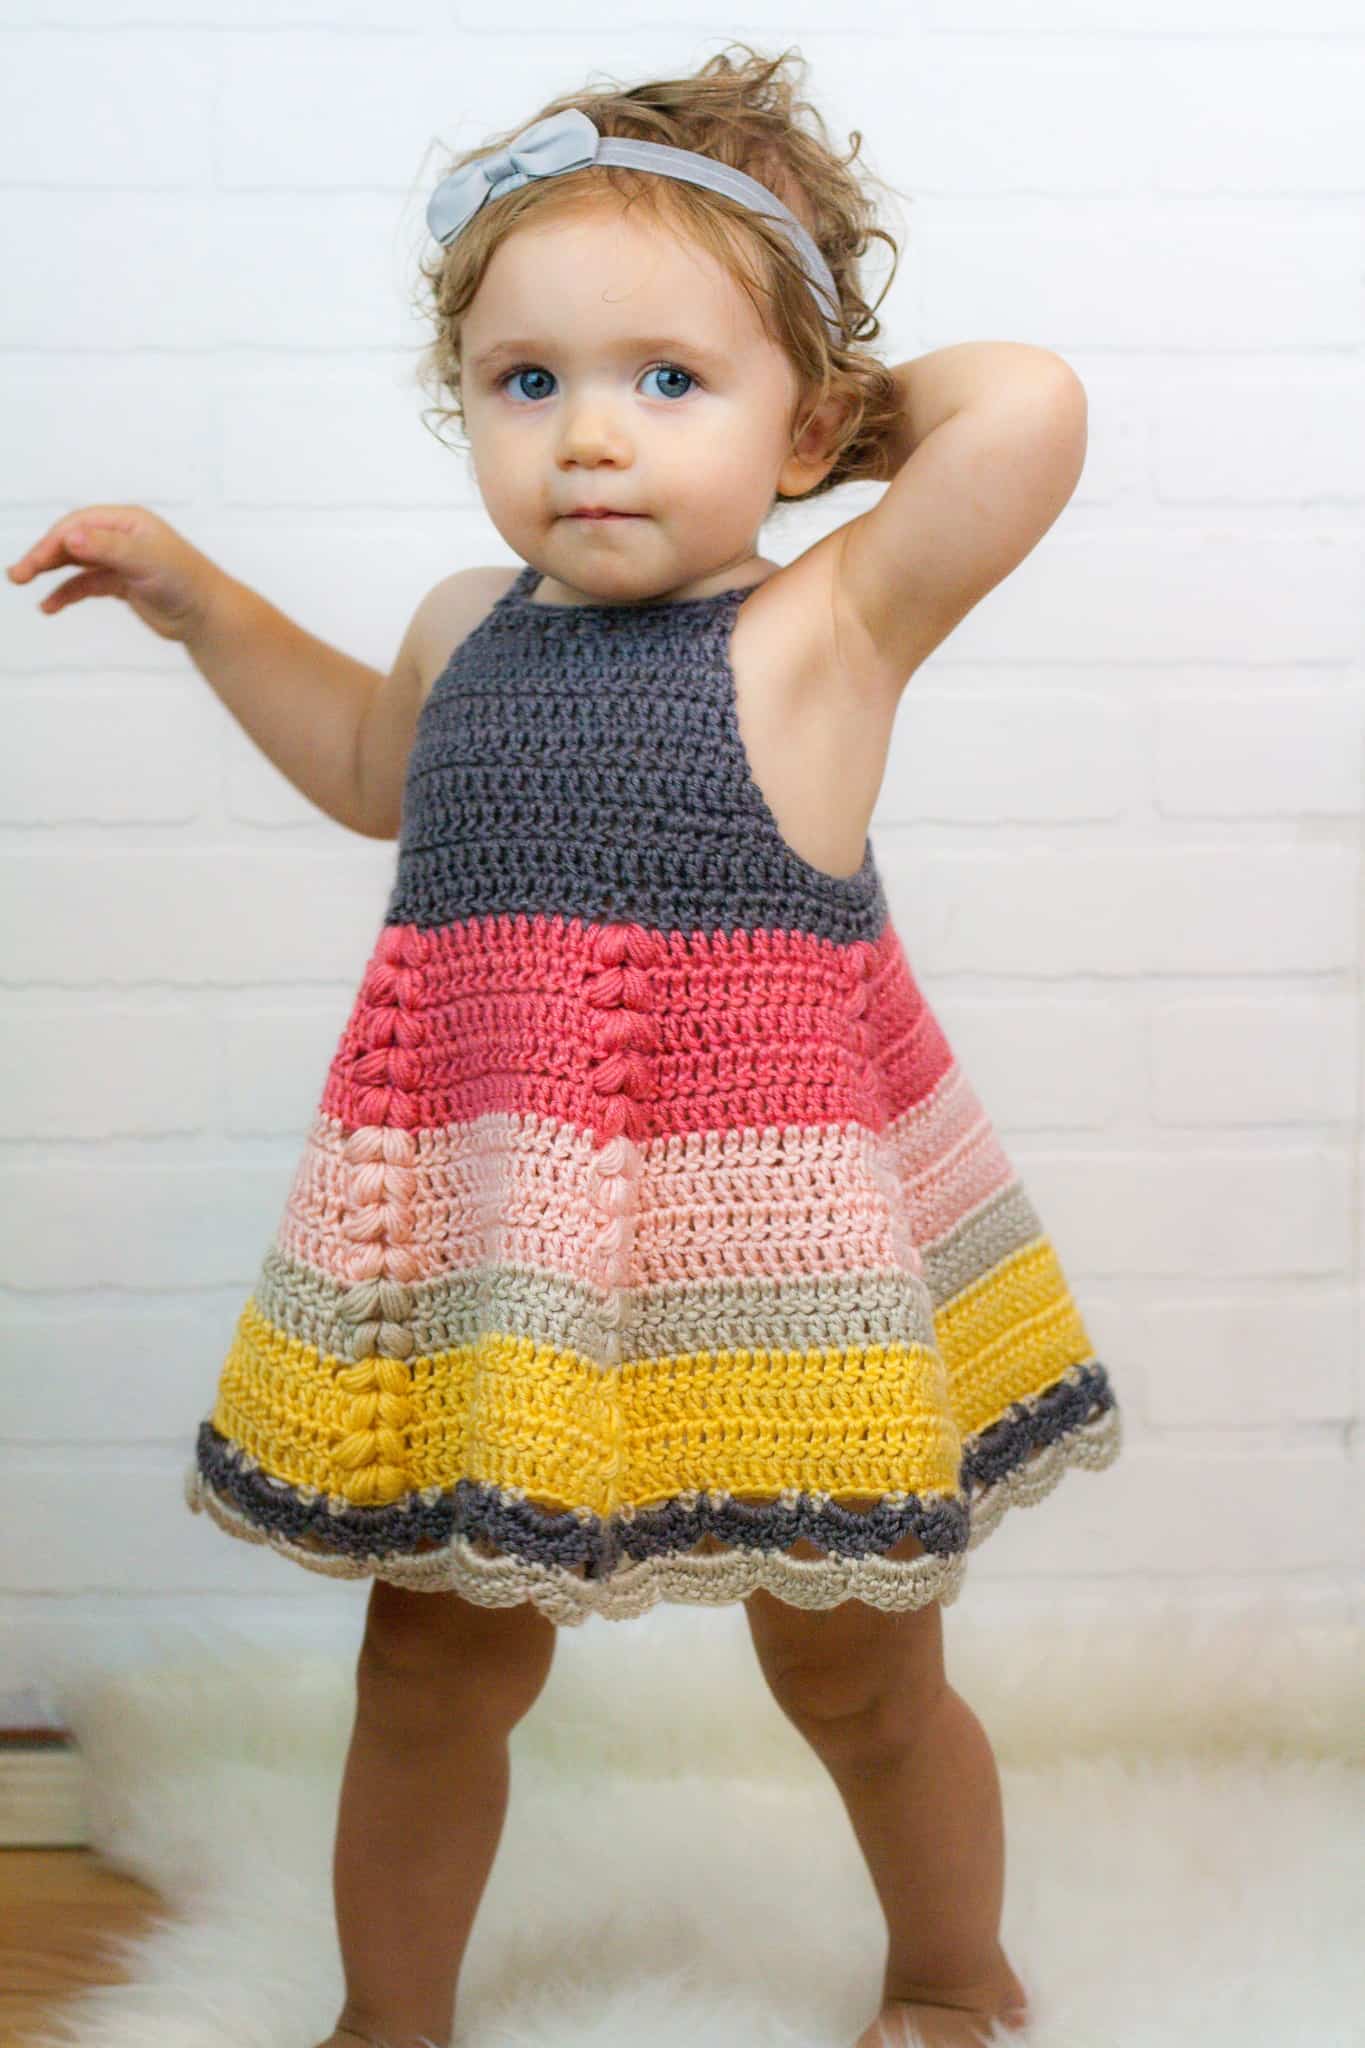 Handmade Puff Stitch Crochet Dress For Toddlers Crochet Dresses for Kids